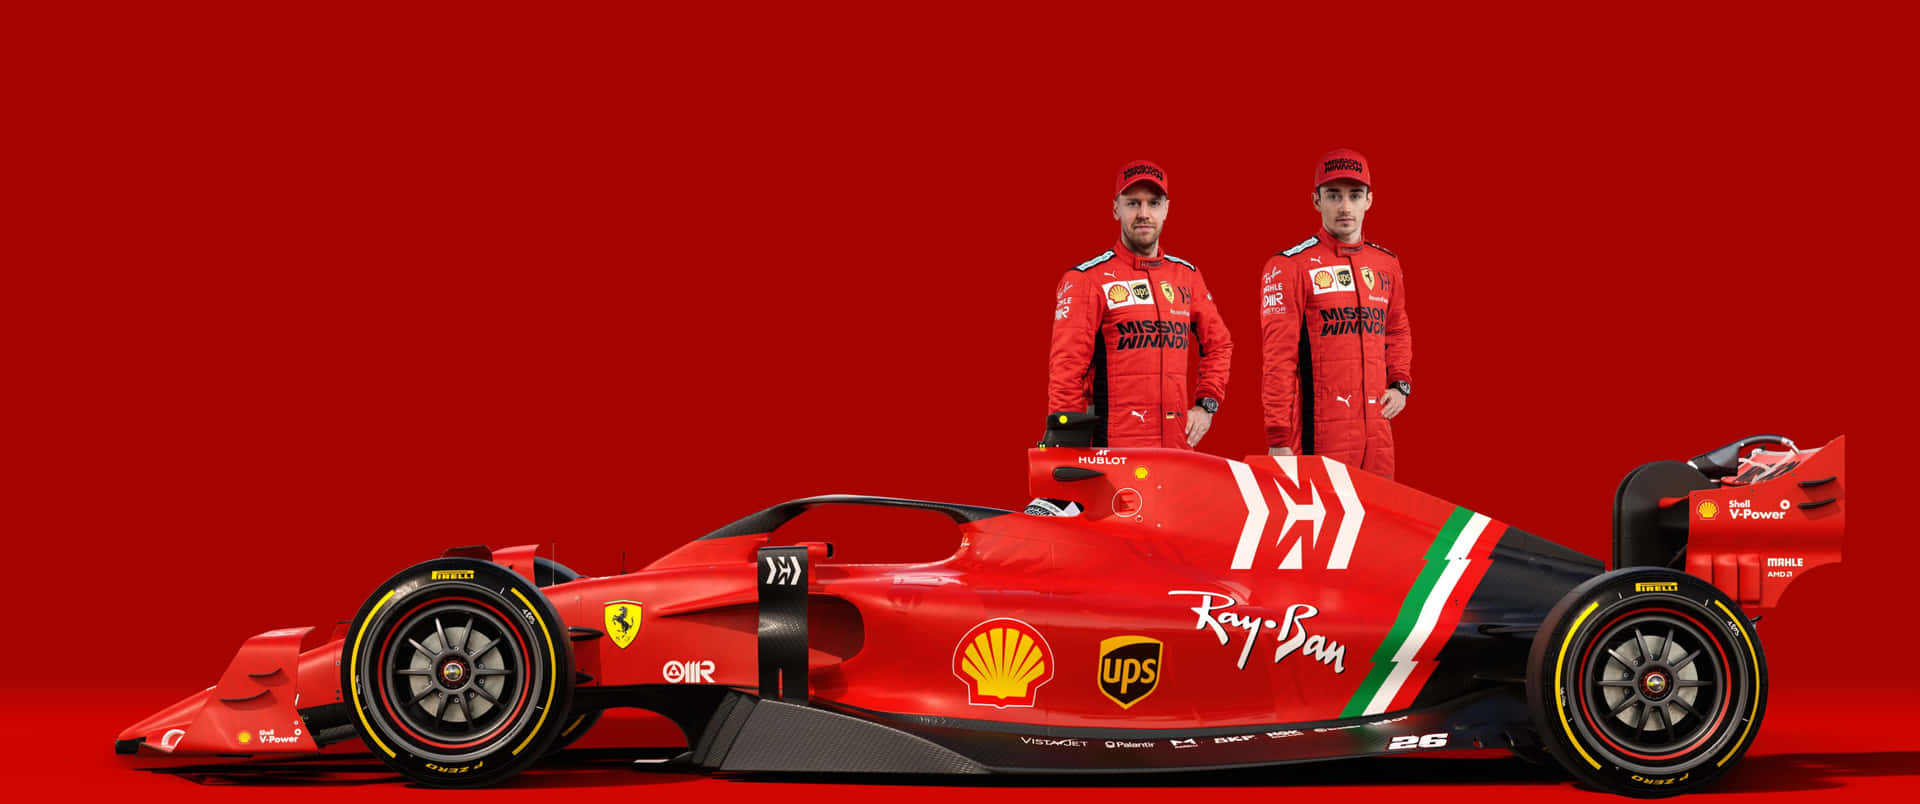 3440x1440p Ferrari Background Wallpaper